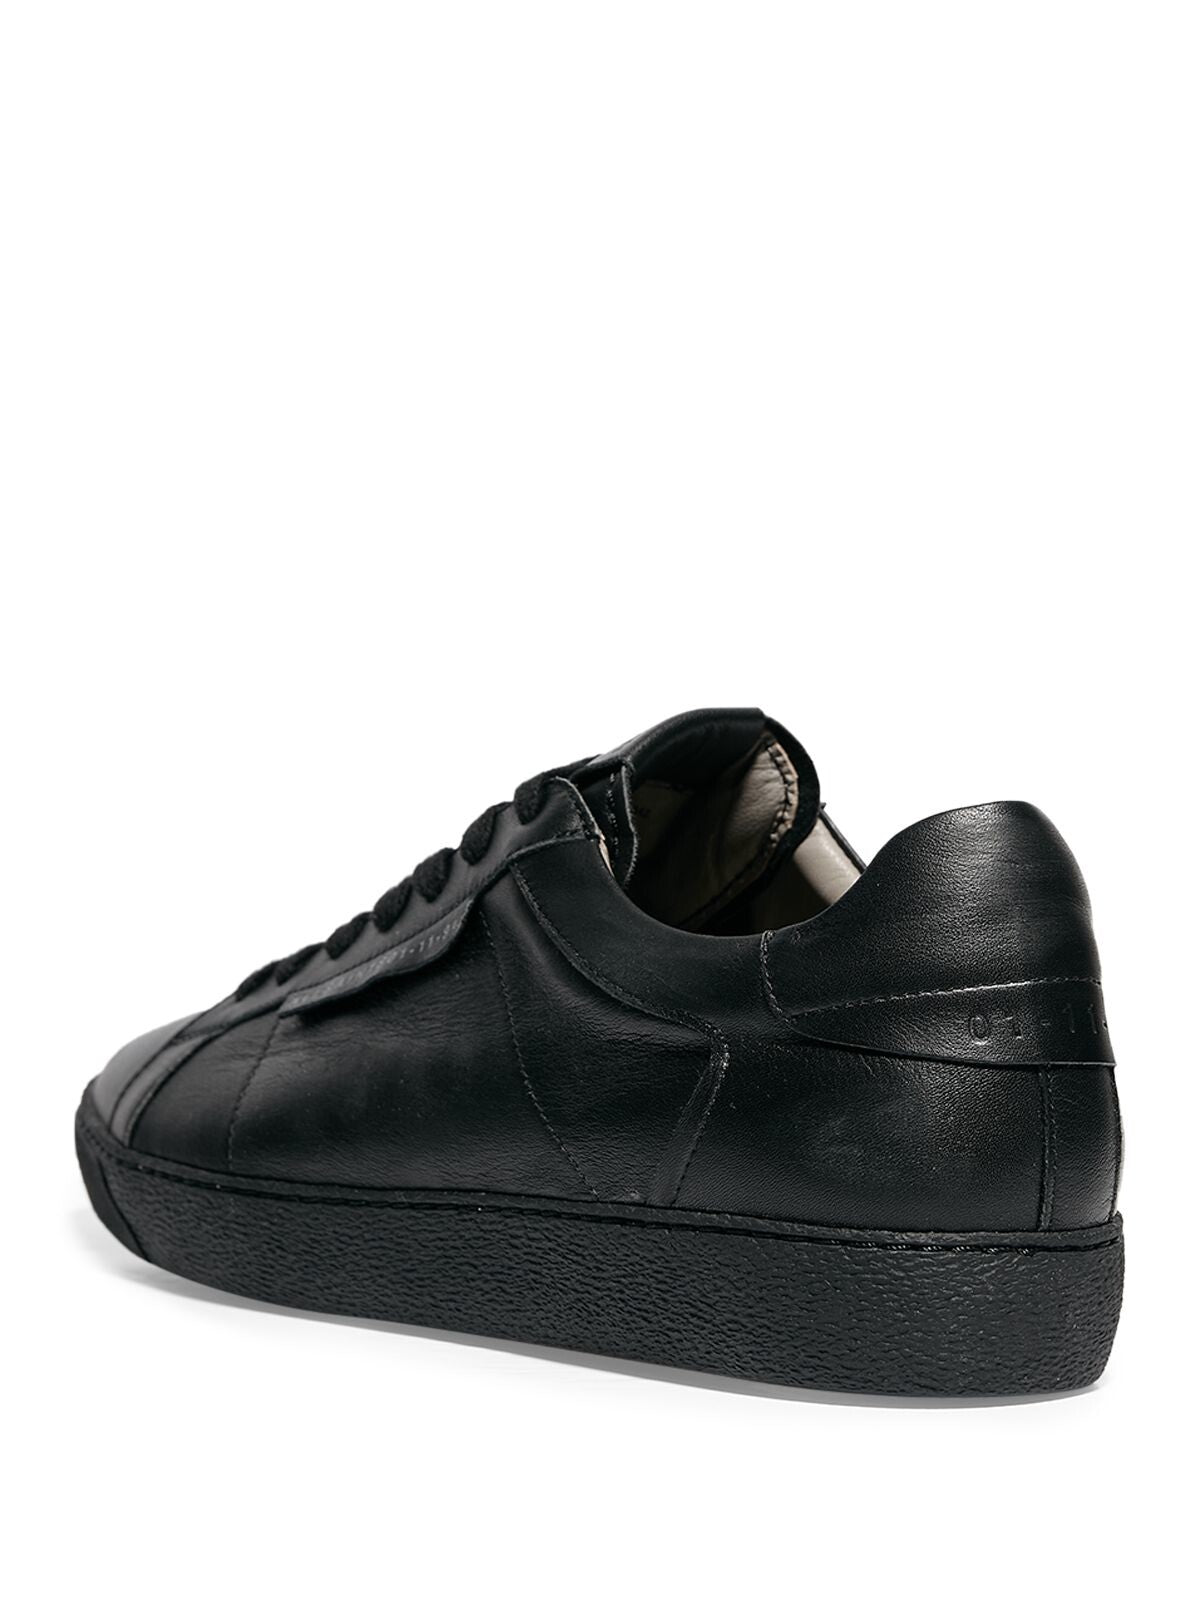 ALLSAINTS Mens Black Sheer Round Toe Platform Lace-Up Athletic Sneakers Shoes 40